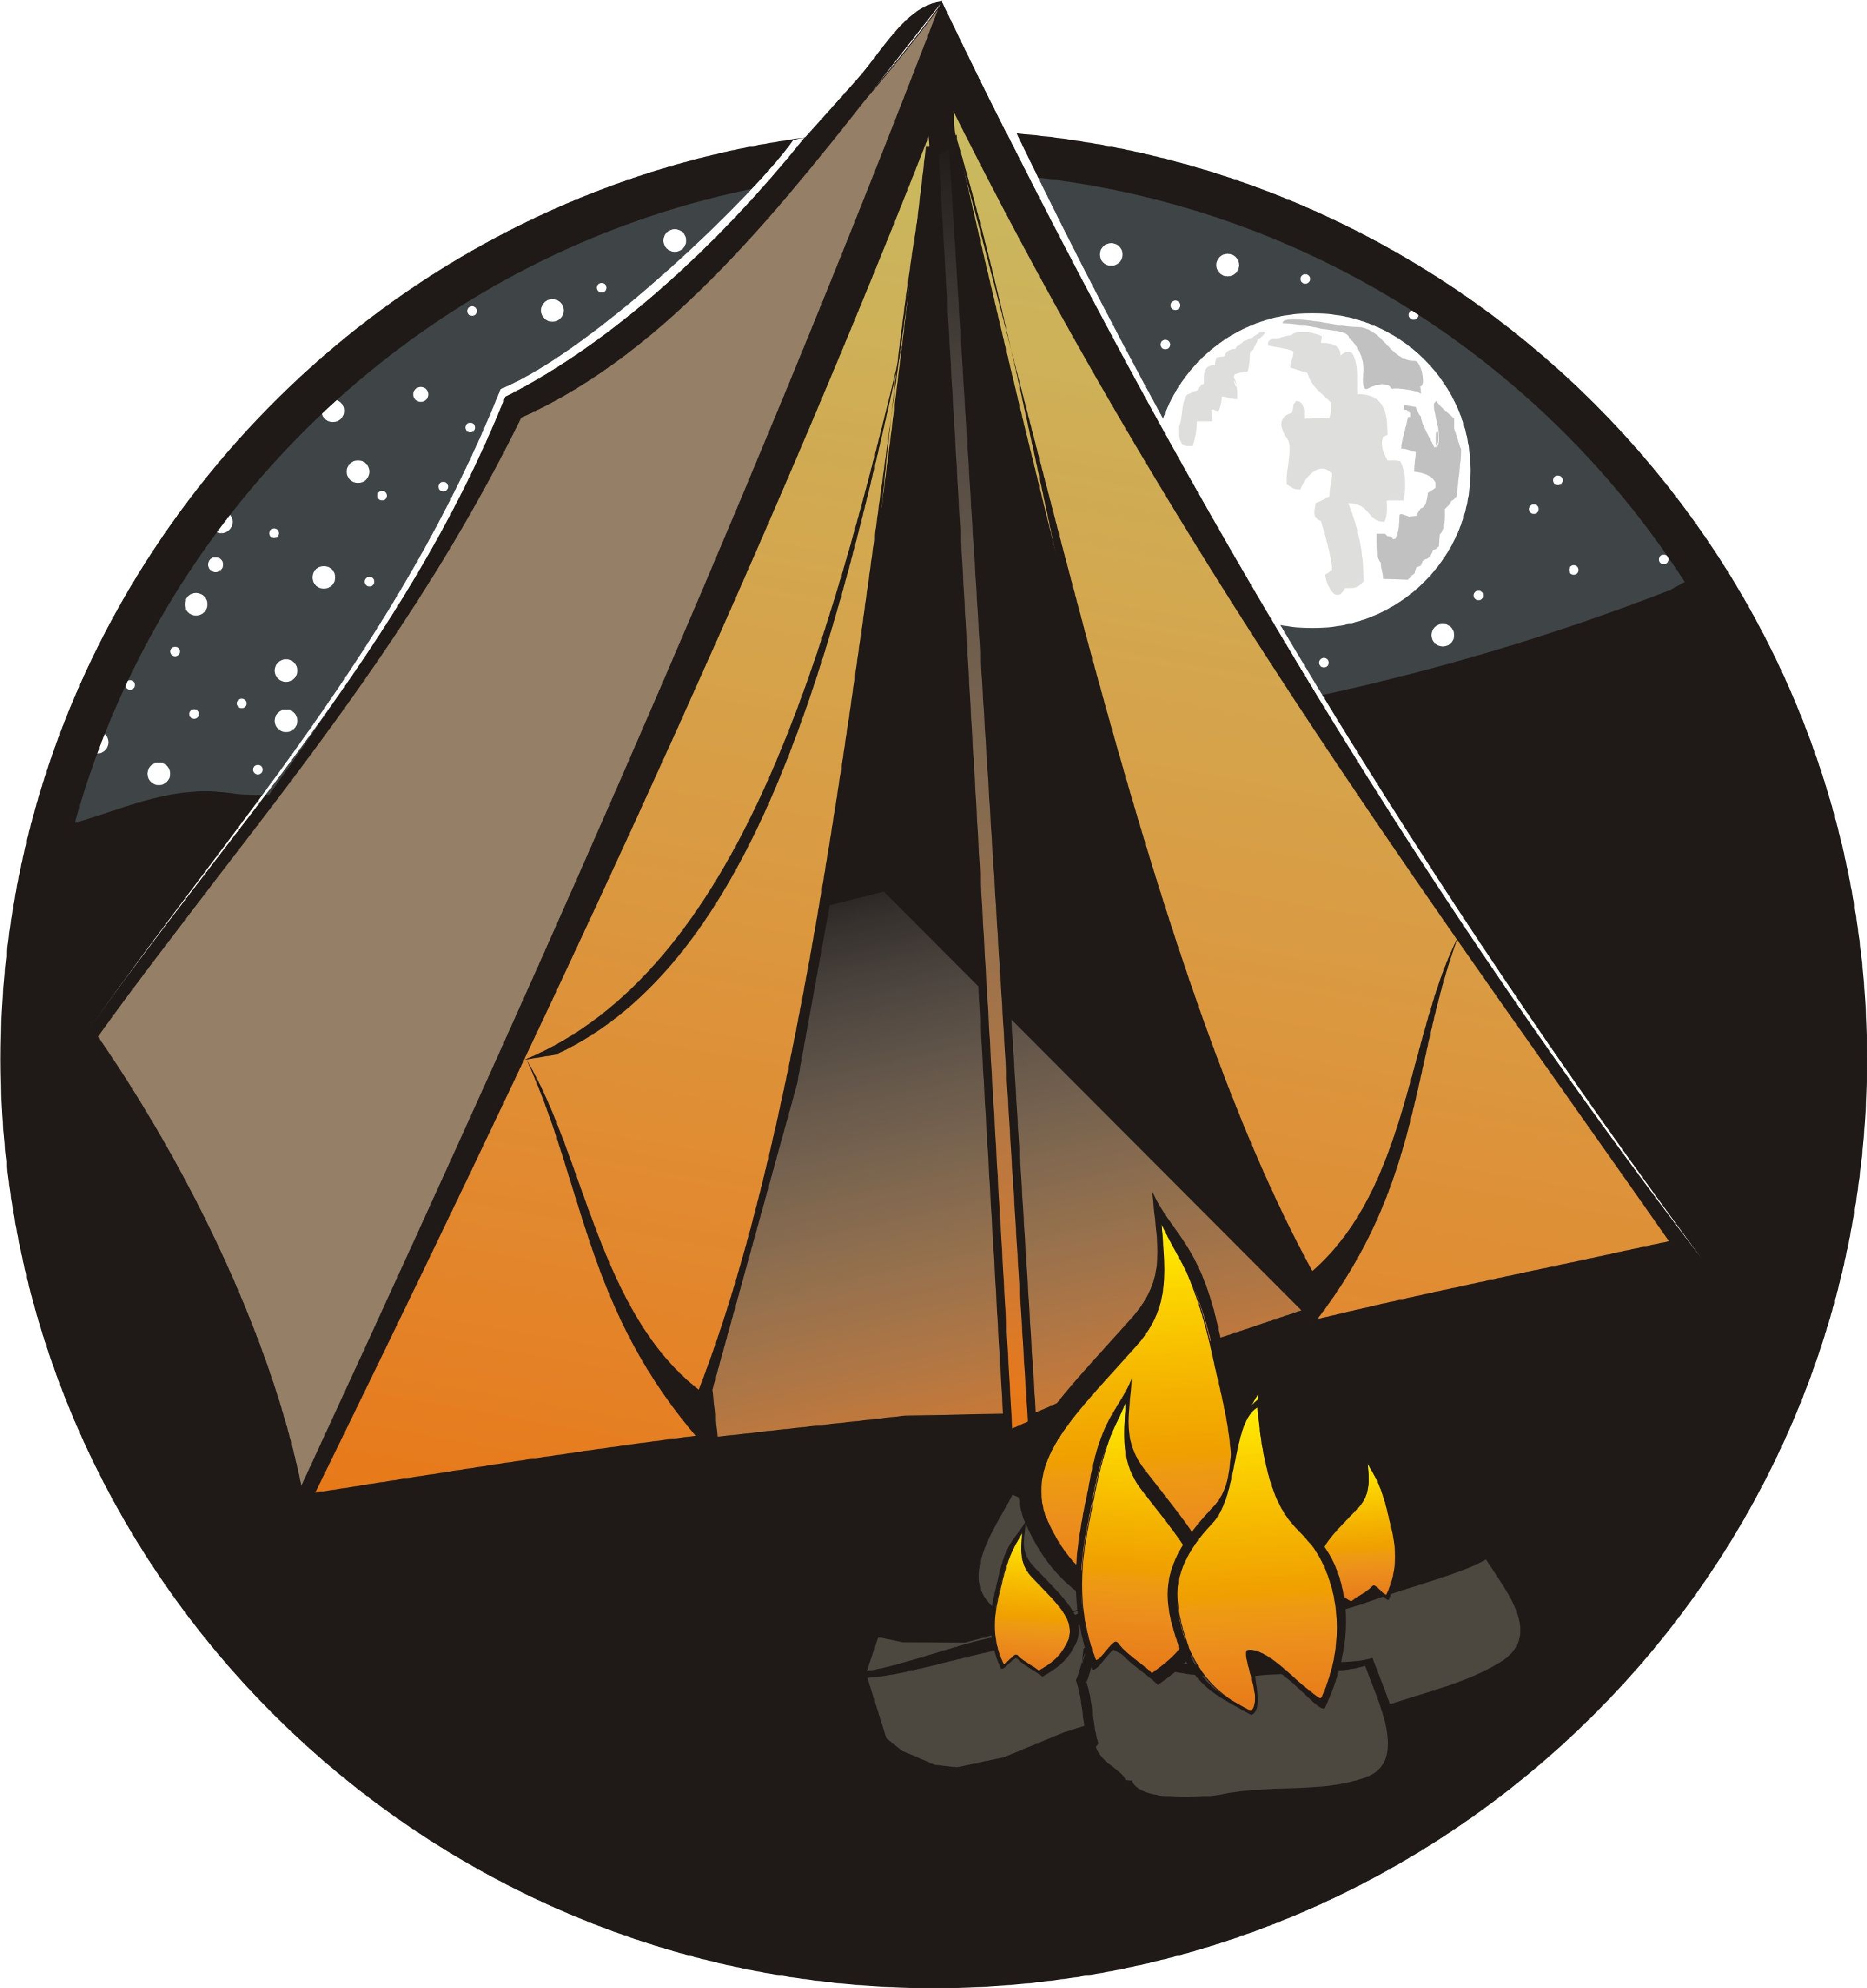 Tent-Camping-Image.jpg